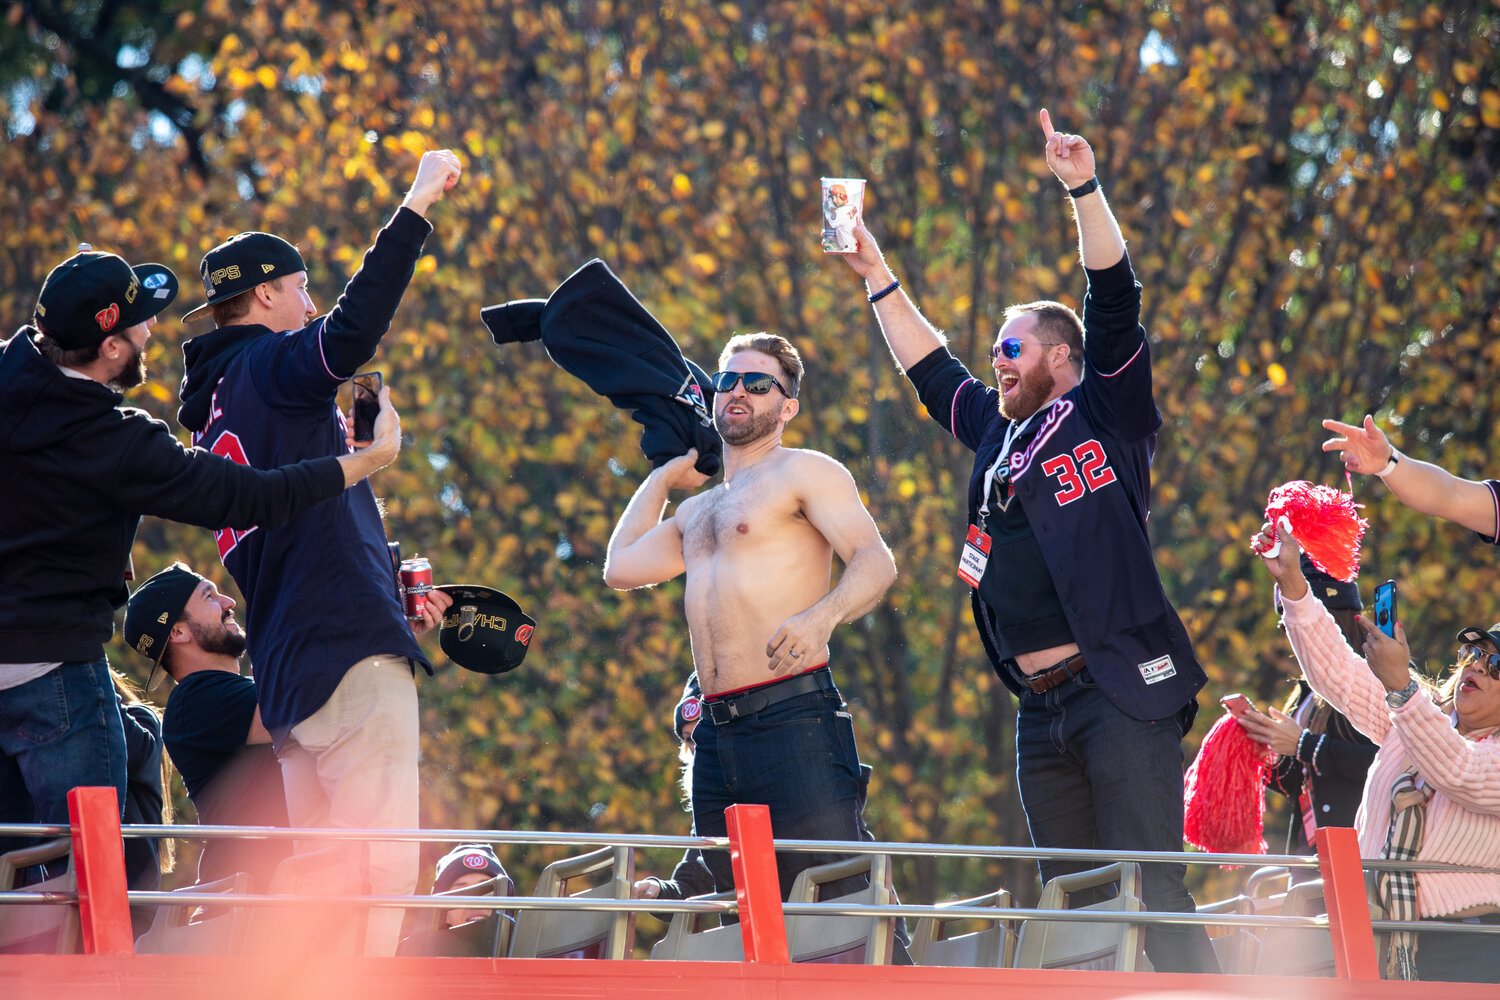 Washing Nationals World Series Parade — Joshua Anolik Photography